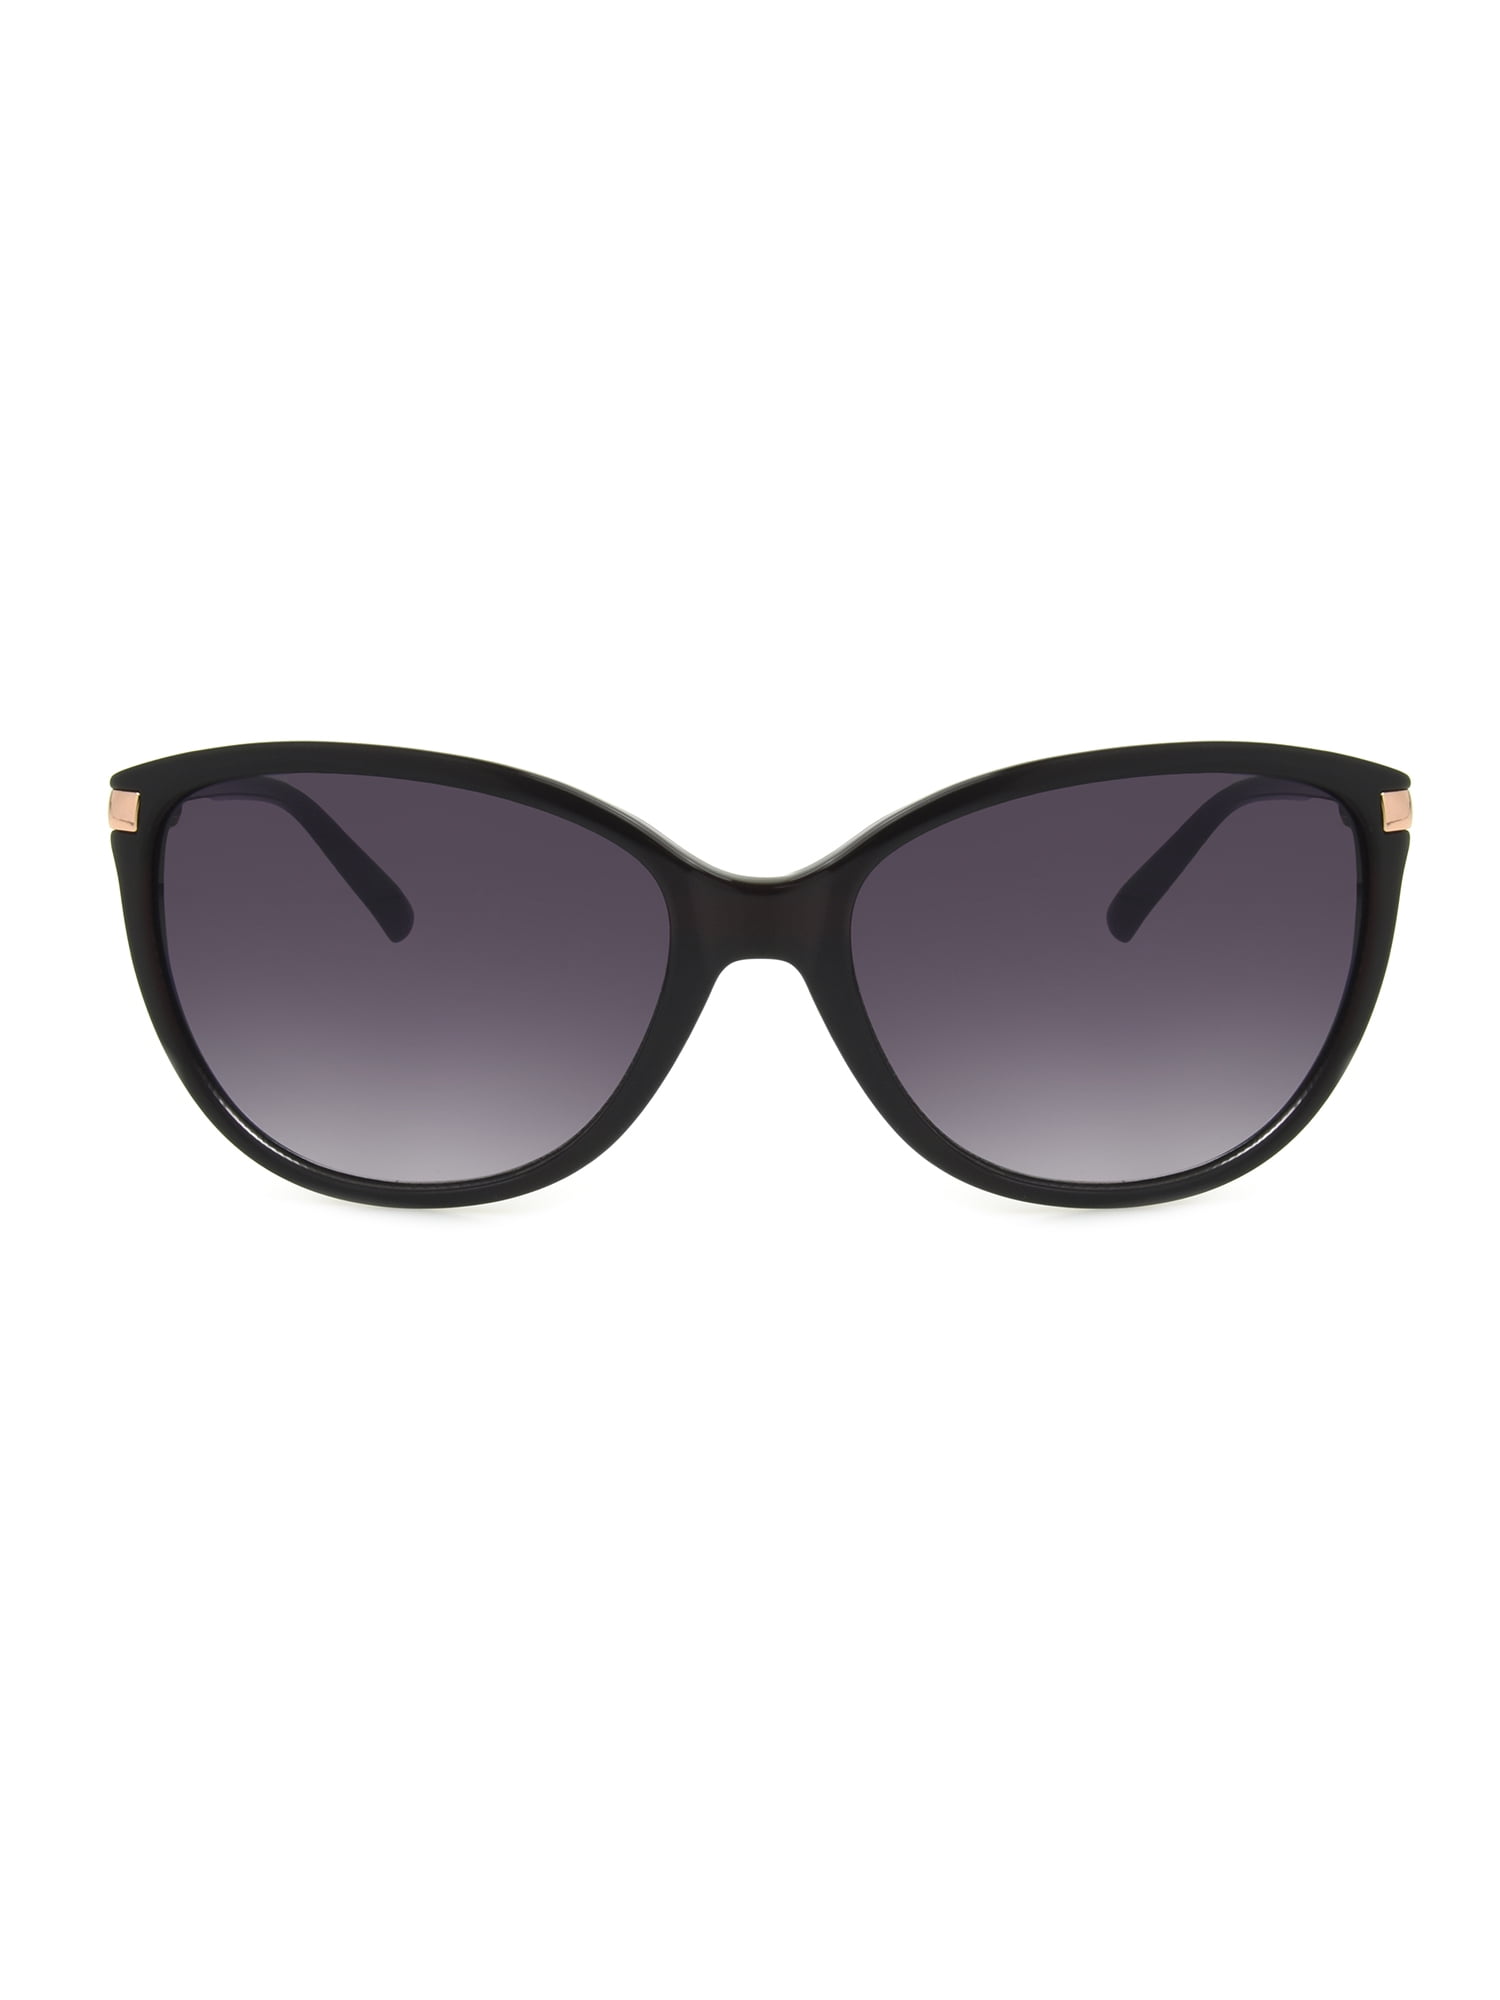 Foster Grant Women's Square Plum Sunglasses